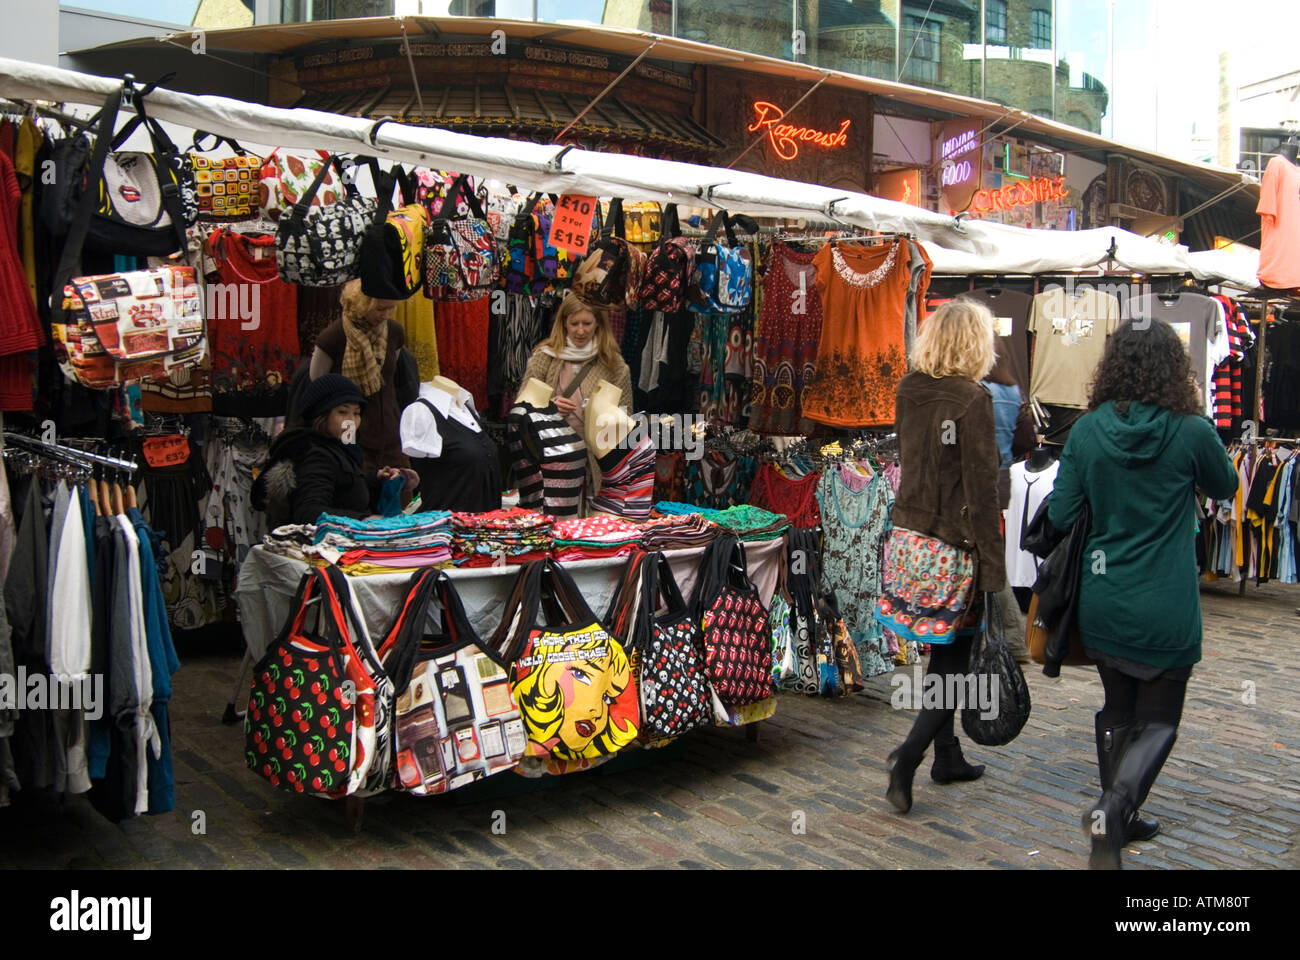 Clothes stall at Camden Market, London England UK Stock Photo